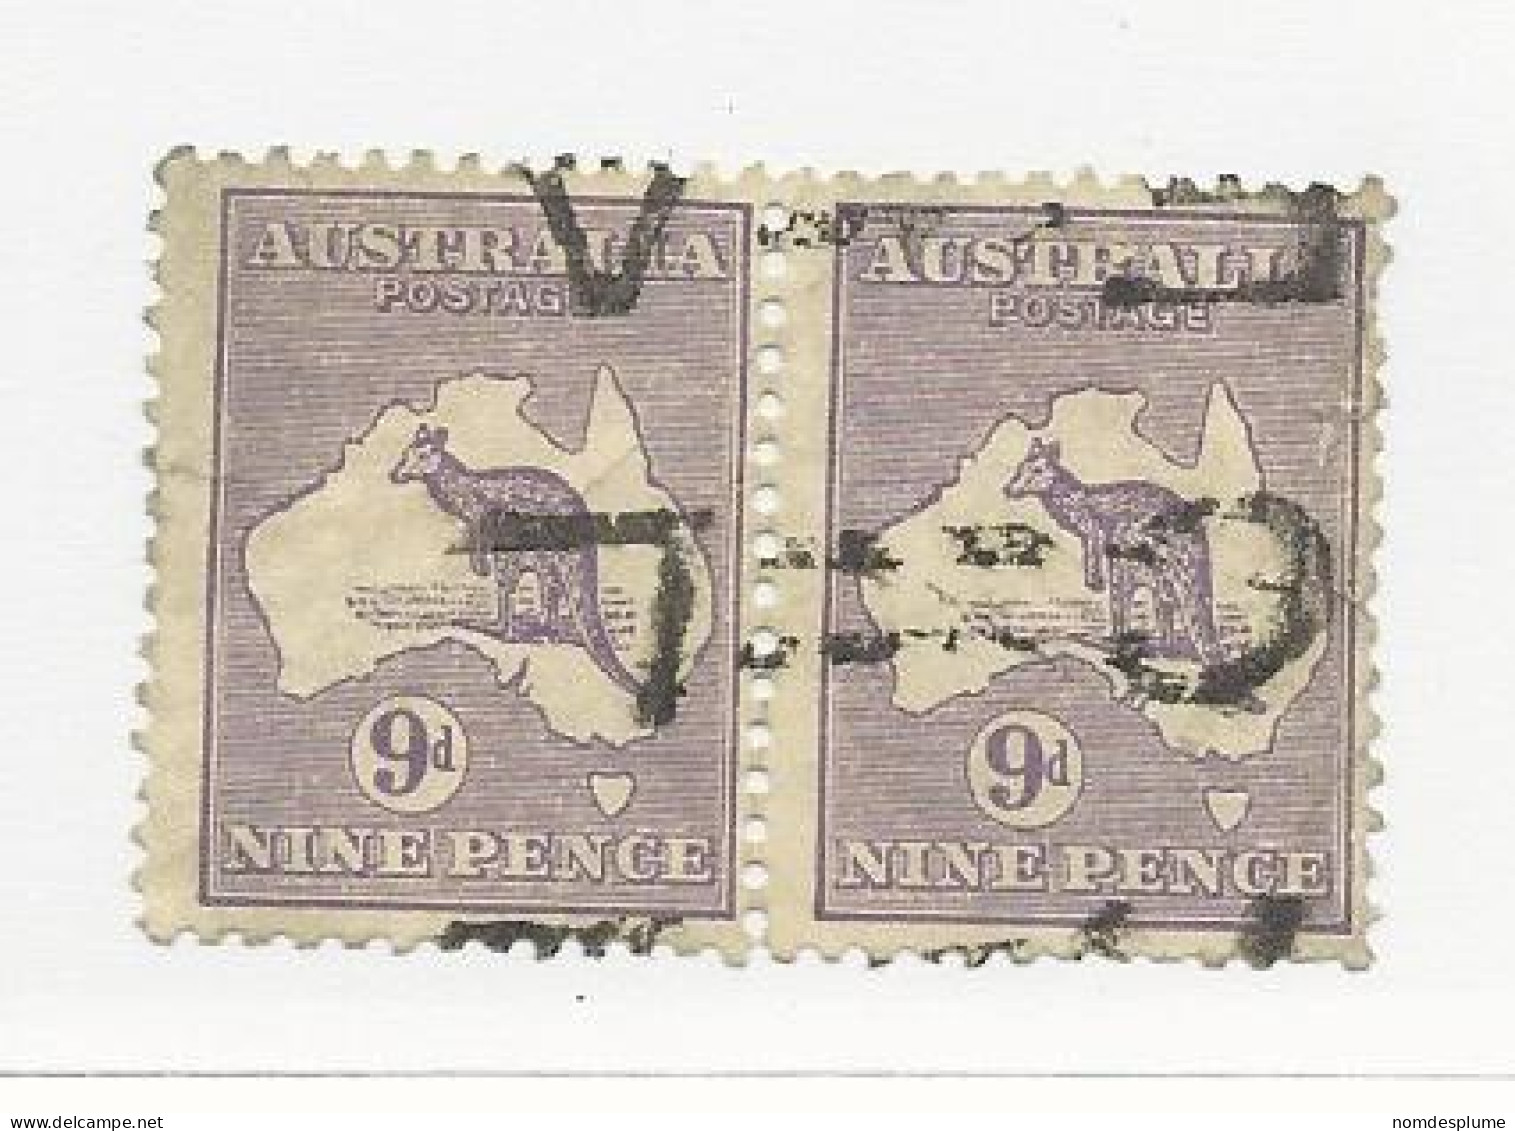 27236 ) Australia 1929 Small Crown A Multi Watermark - Oblitérés